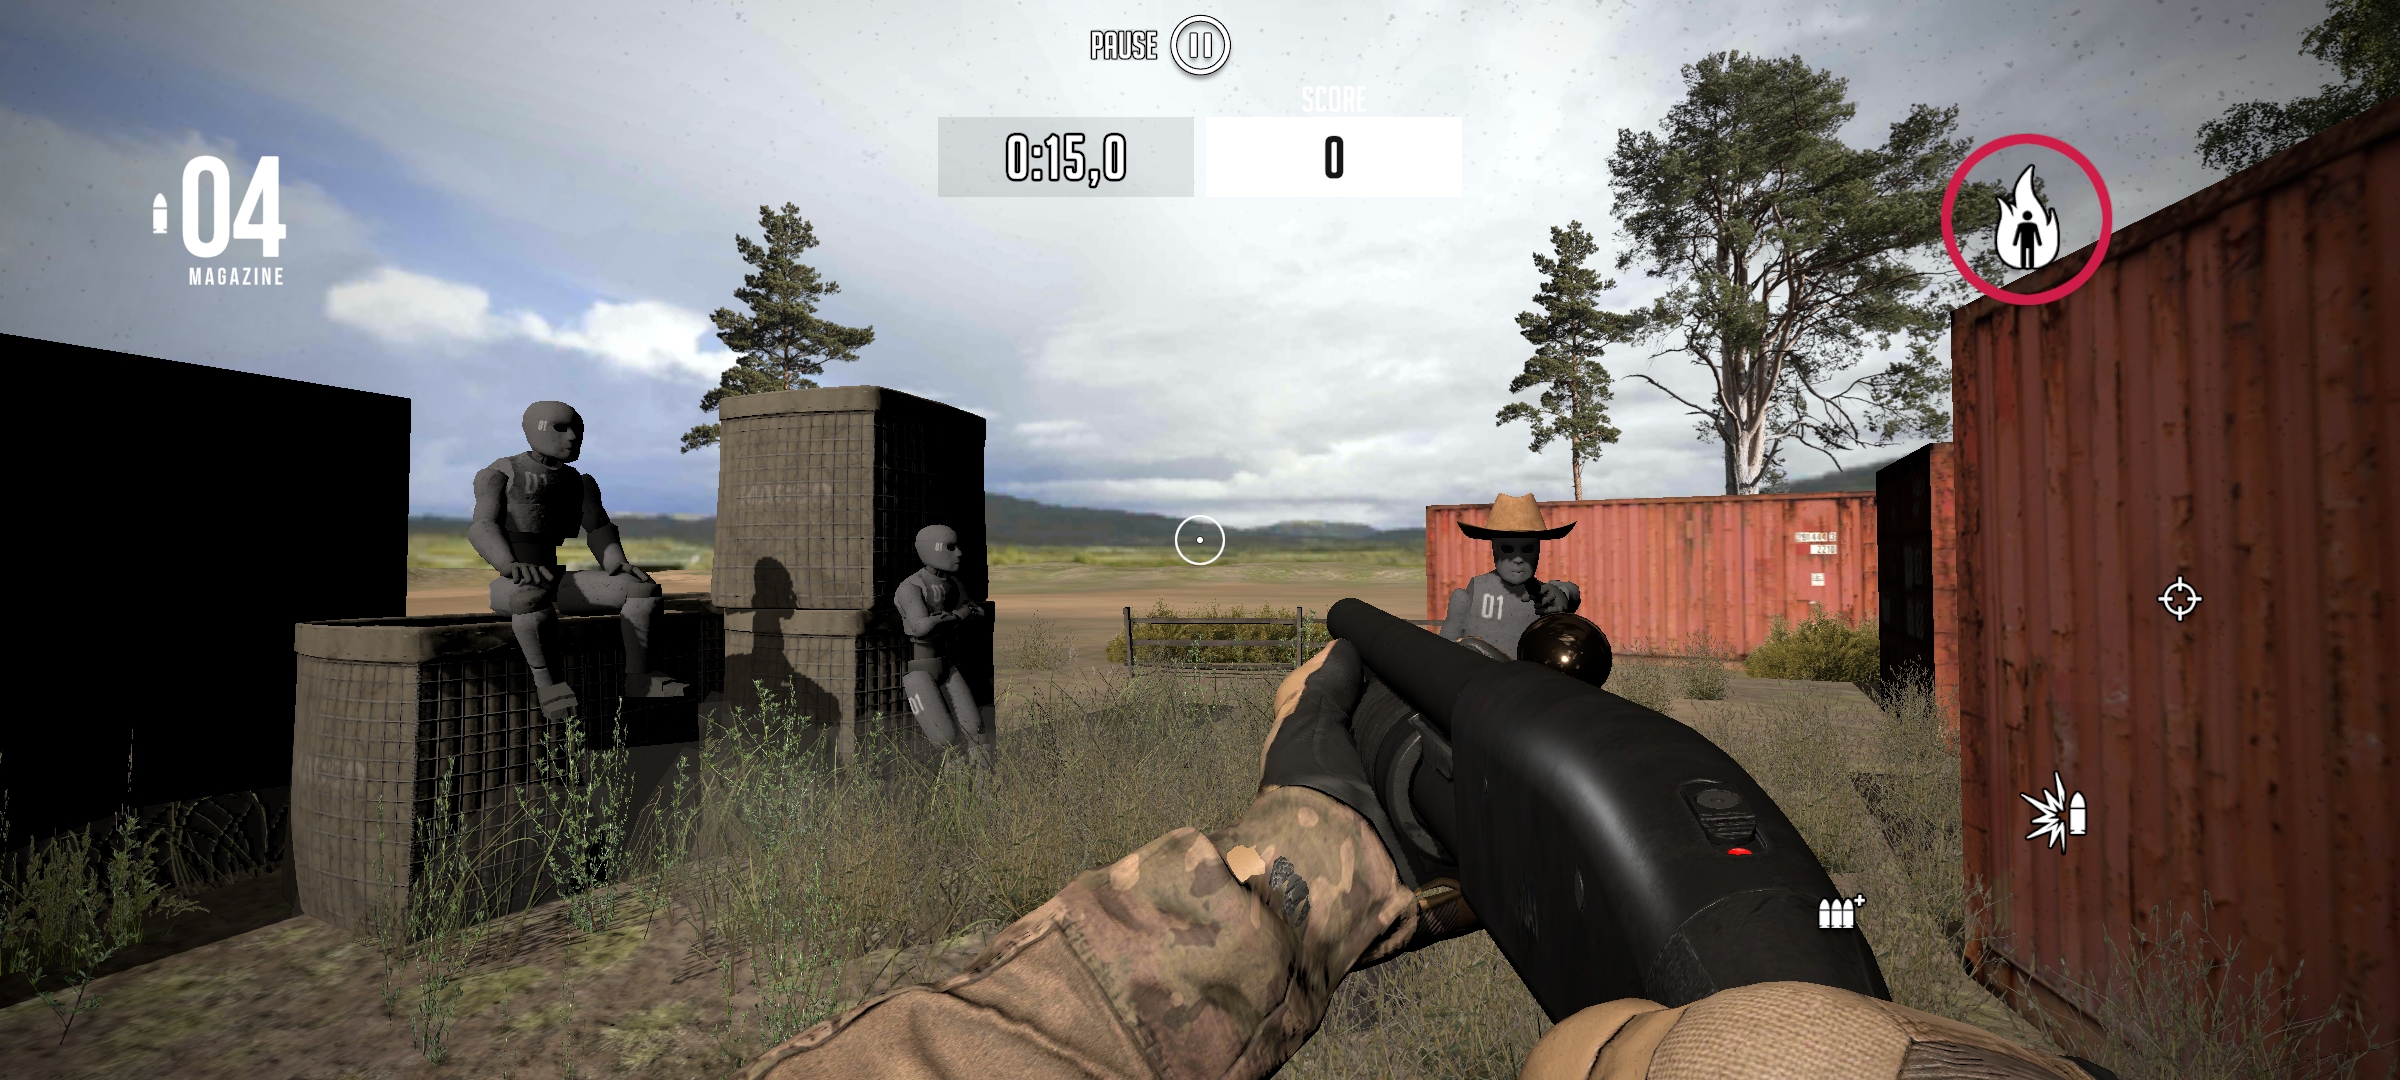 [Game Android] GUNSIM - 3D FPS Shooting Guns